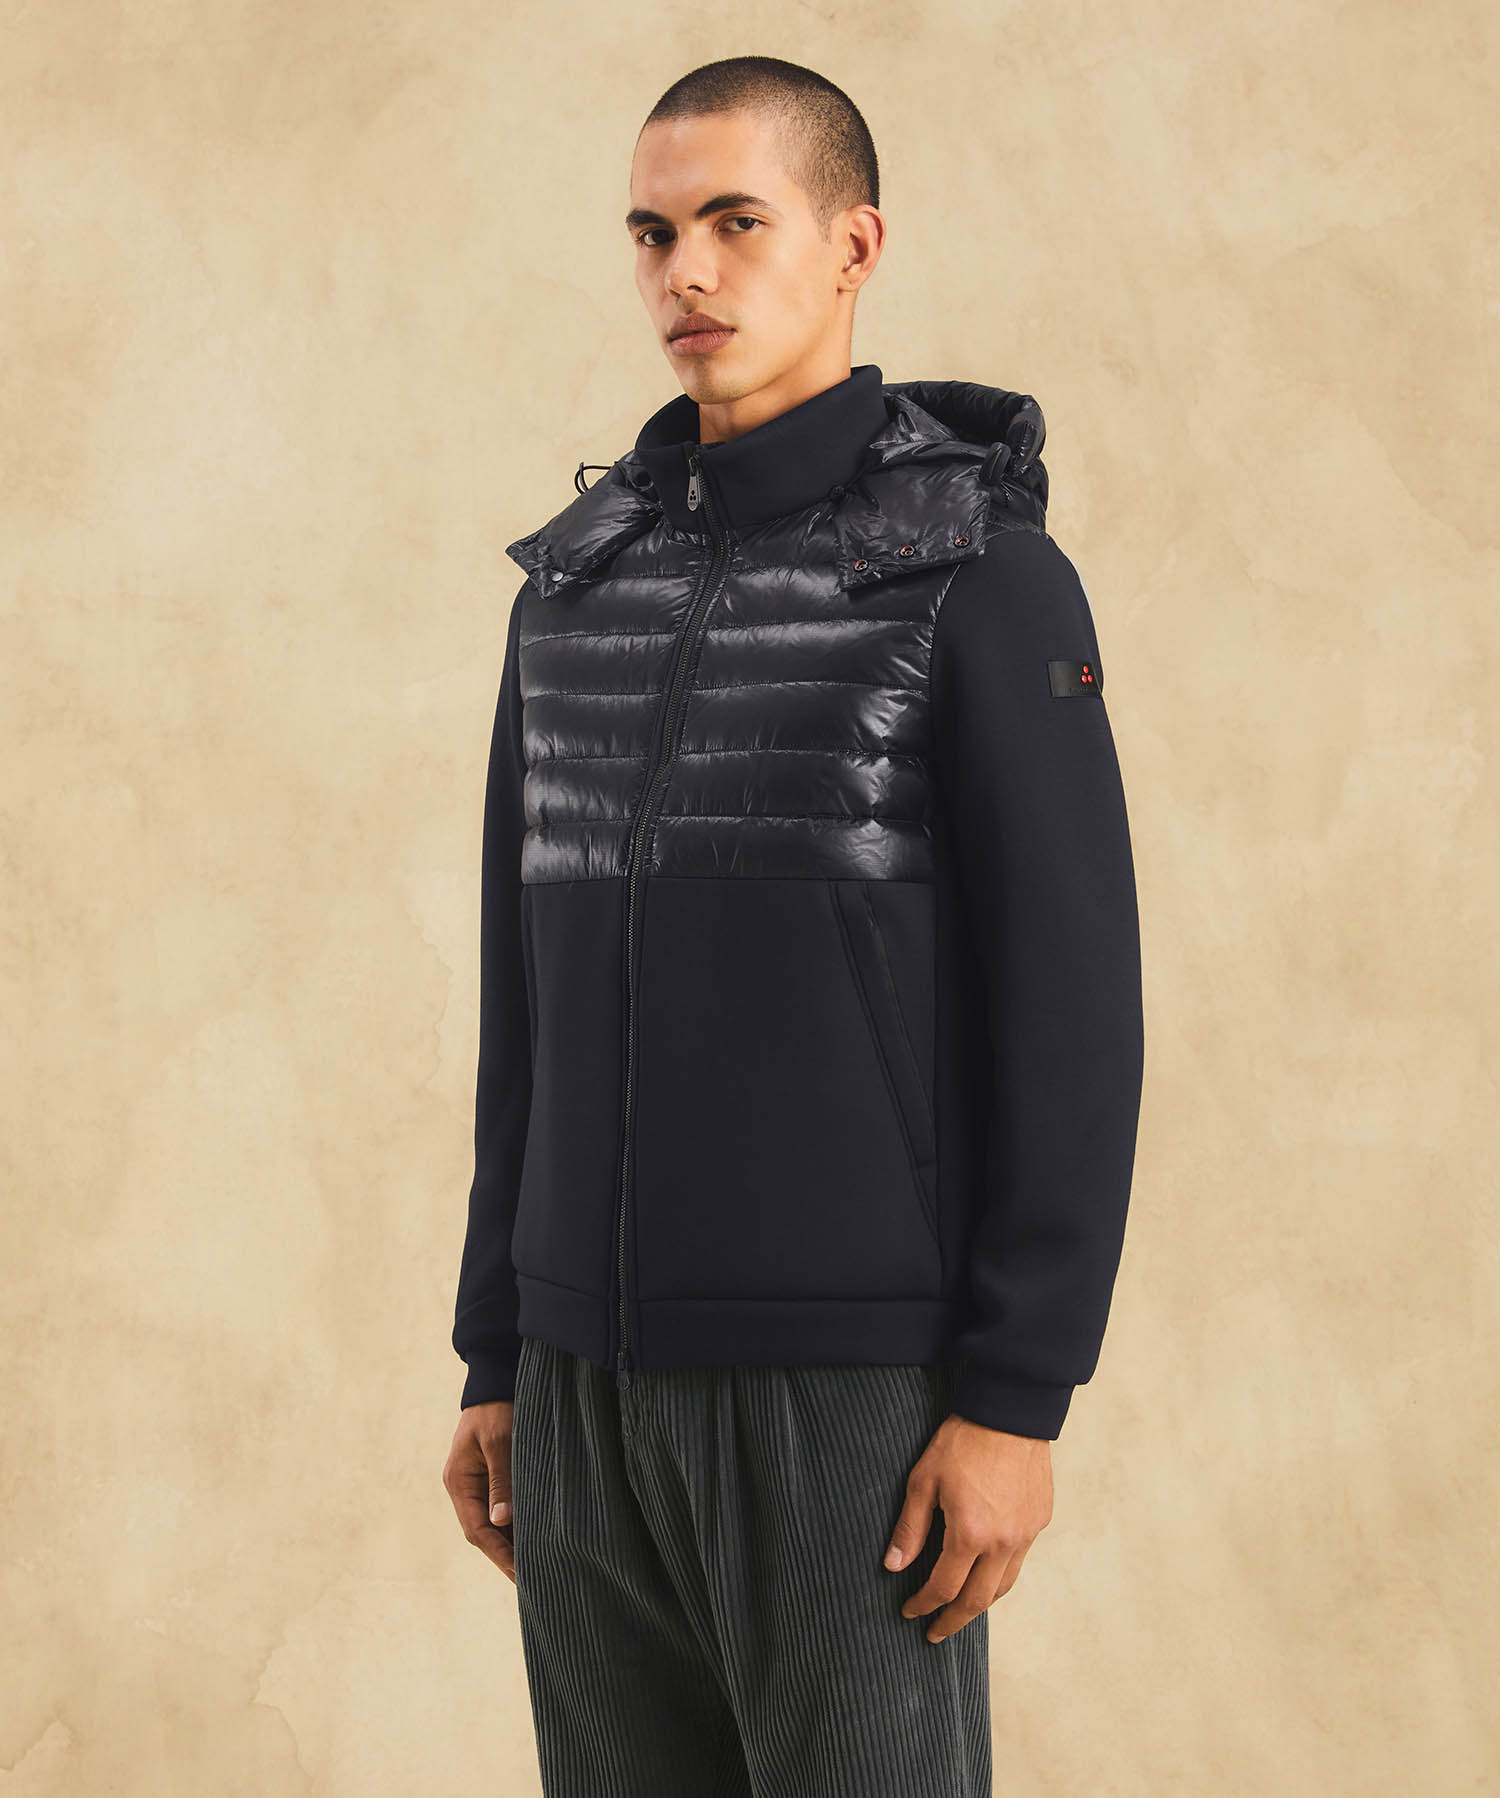 Bimat nylon and scuba bomber jacket for boy, black